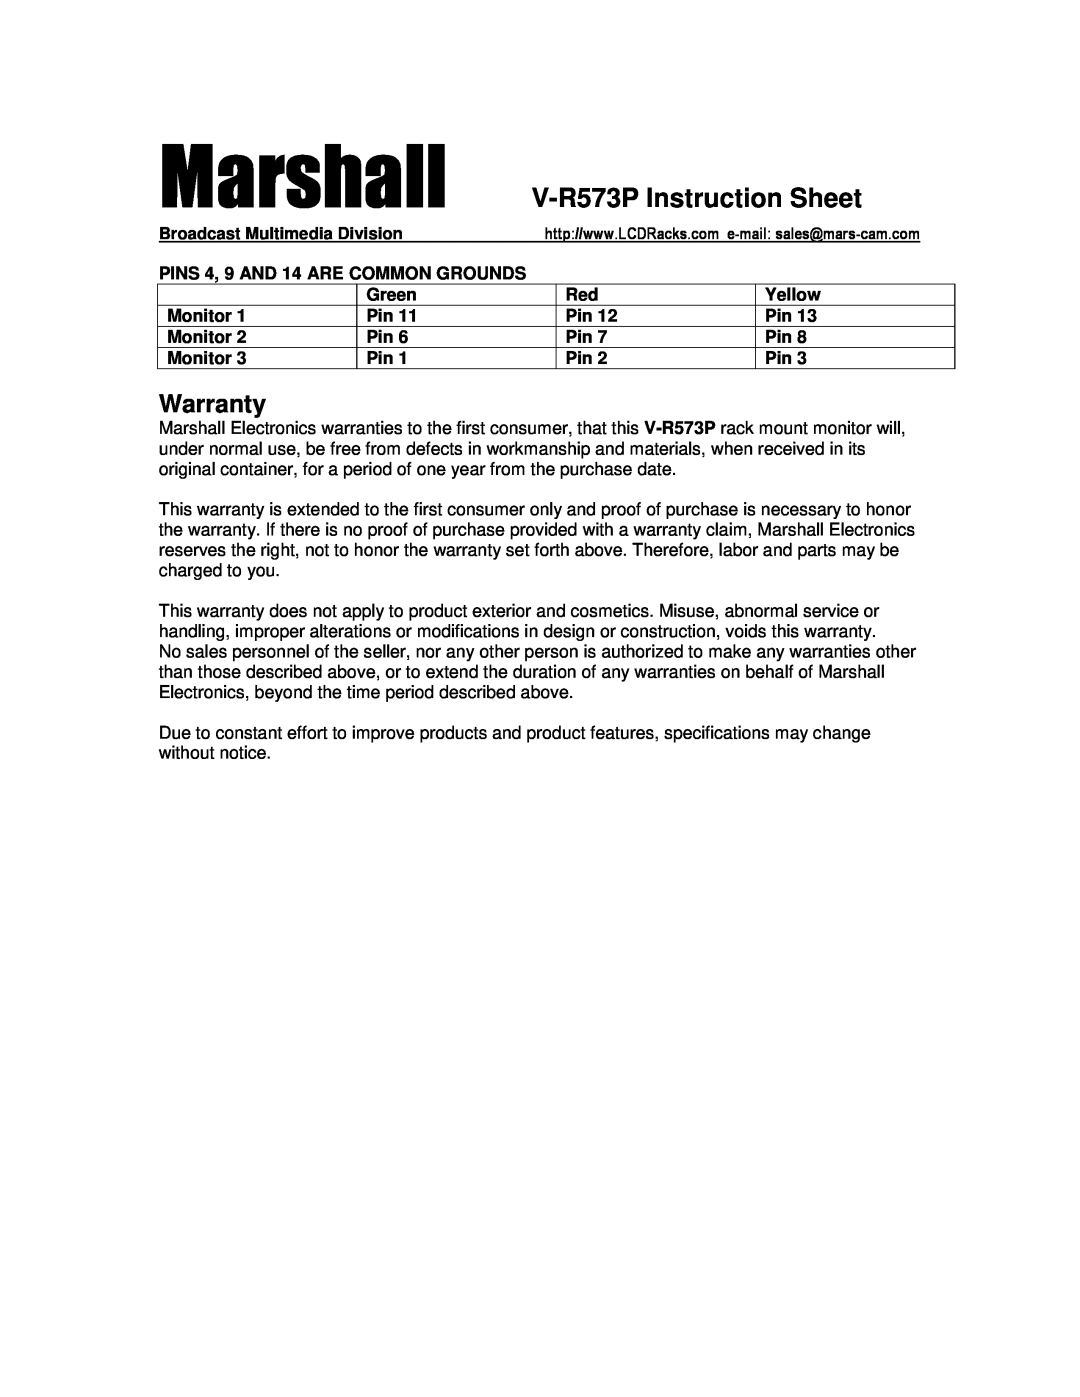 Marshall electronic 6-00518-02 instruction sheet Marshall, V-R573P Instruction Sheet, Warranty 